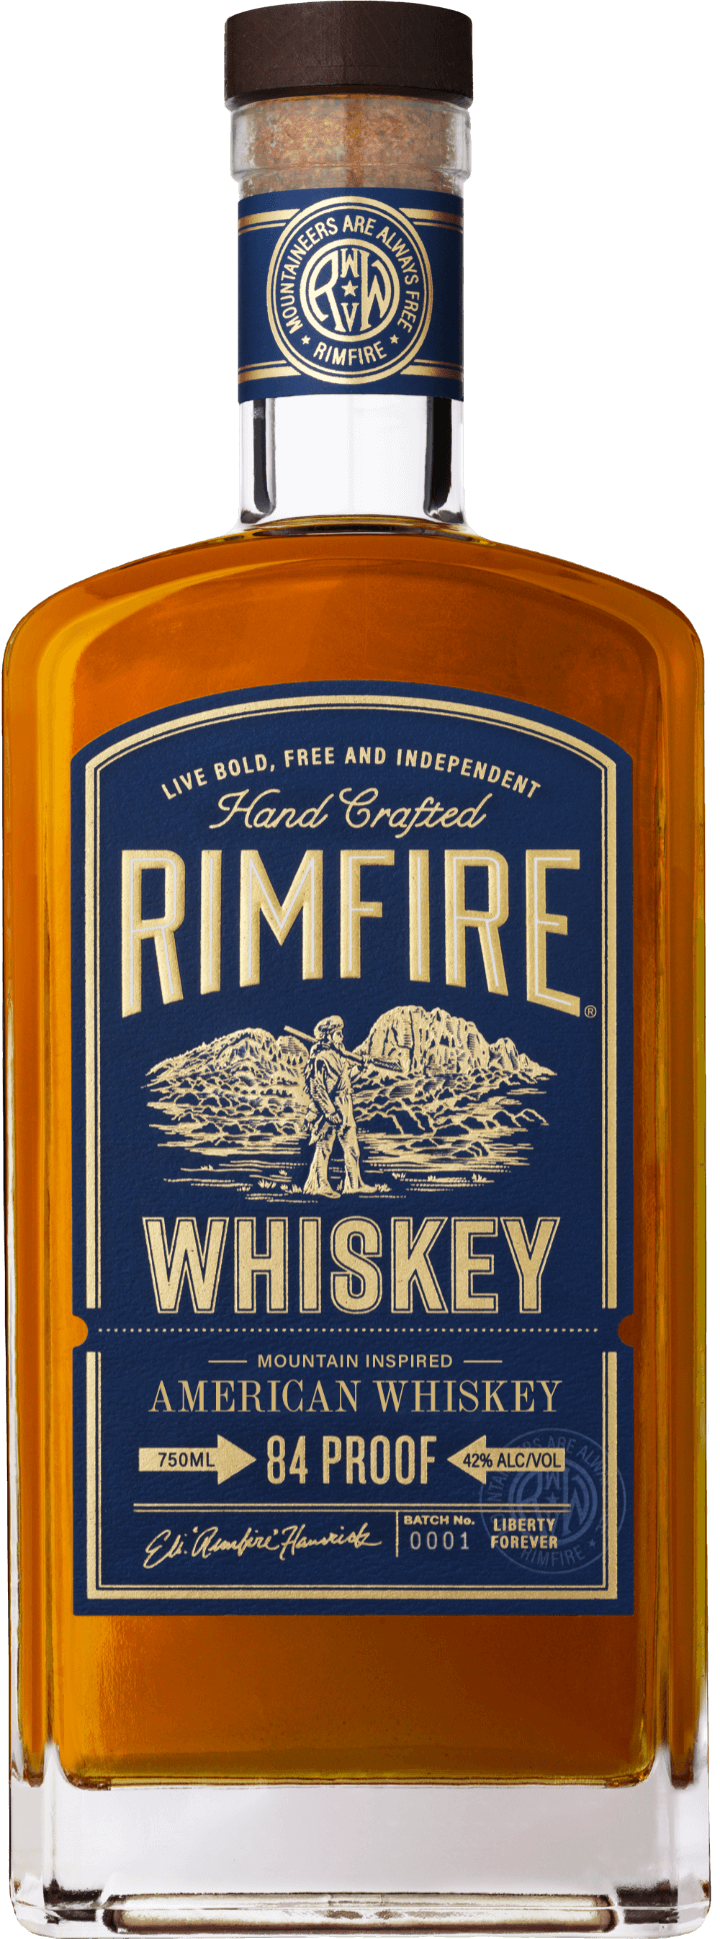 Rimfire American Whiskey Bottle Front